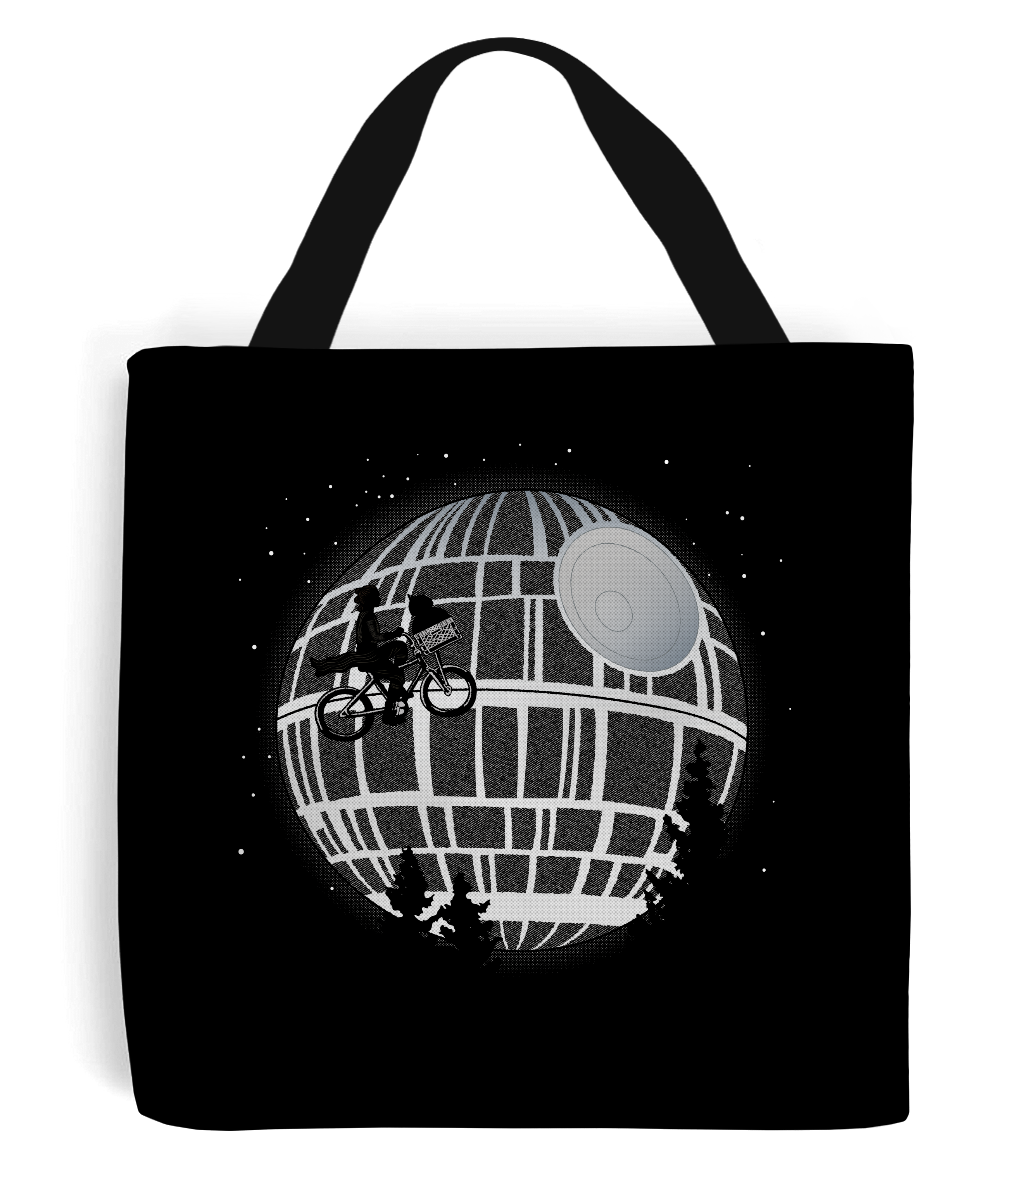 star wars death star tote bag